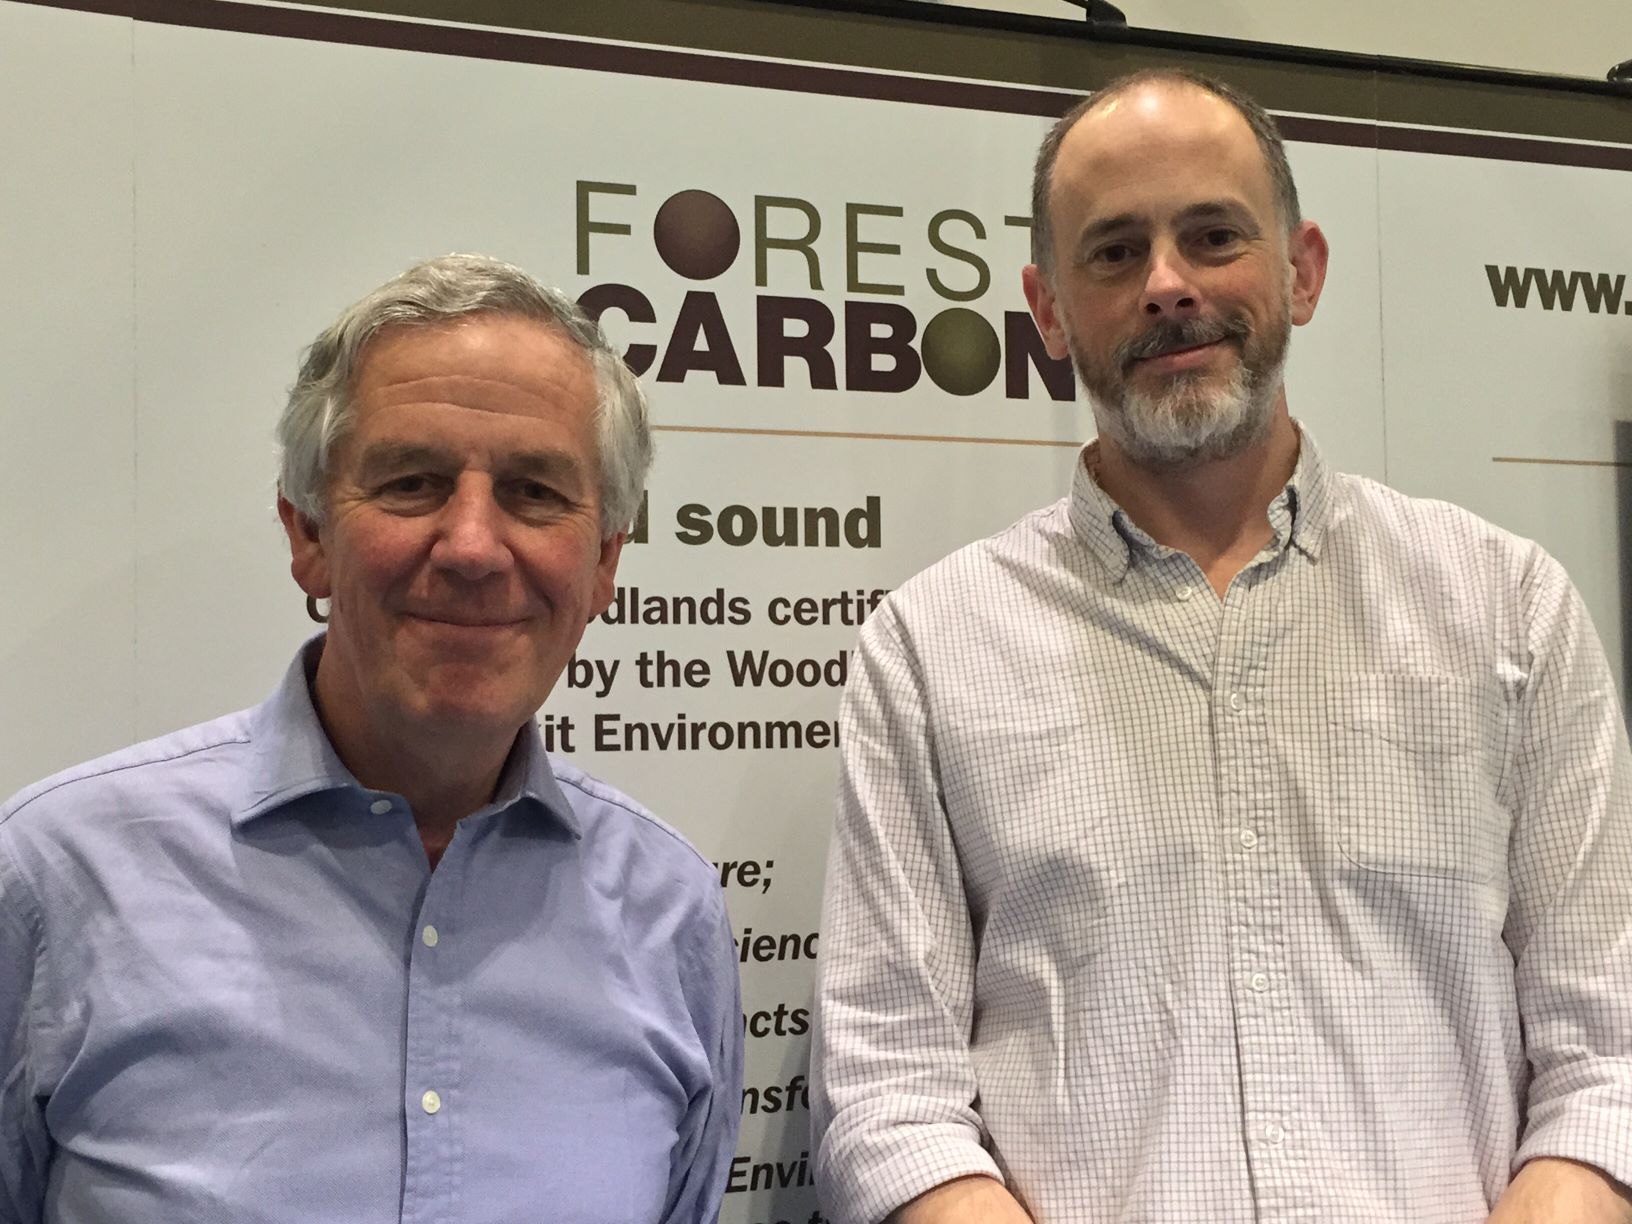 Co-Founders of Forest Carbon: James Hepburne Scott and Steve Prior